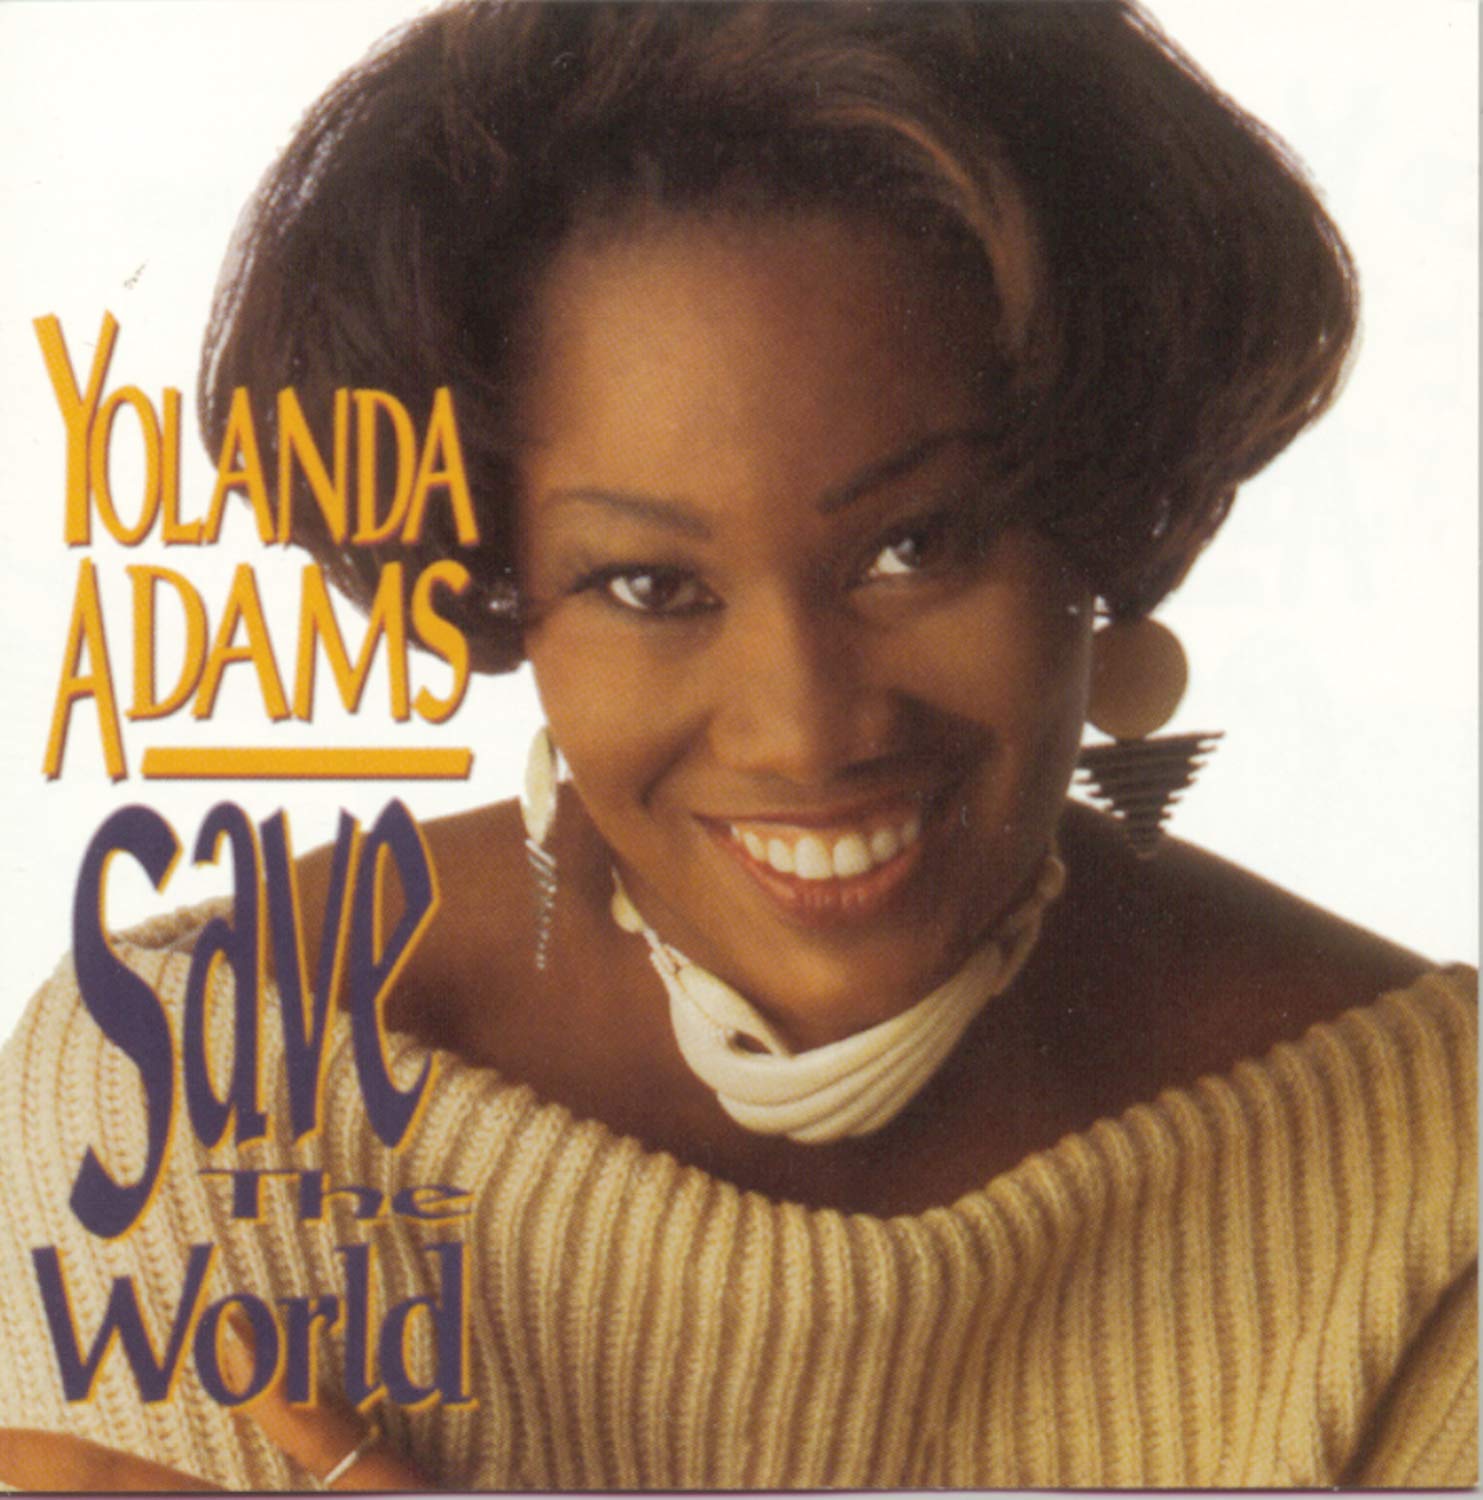 Save The World CD - Yolanda Adams